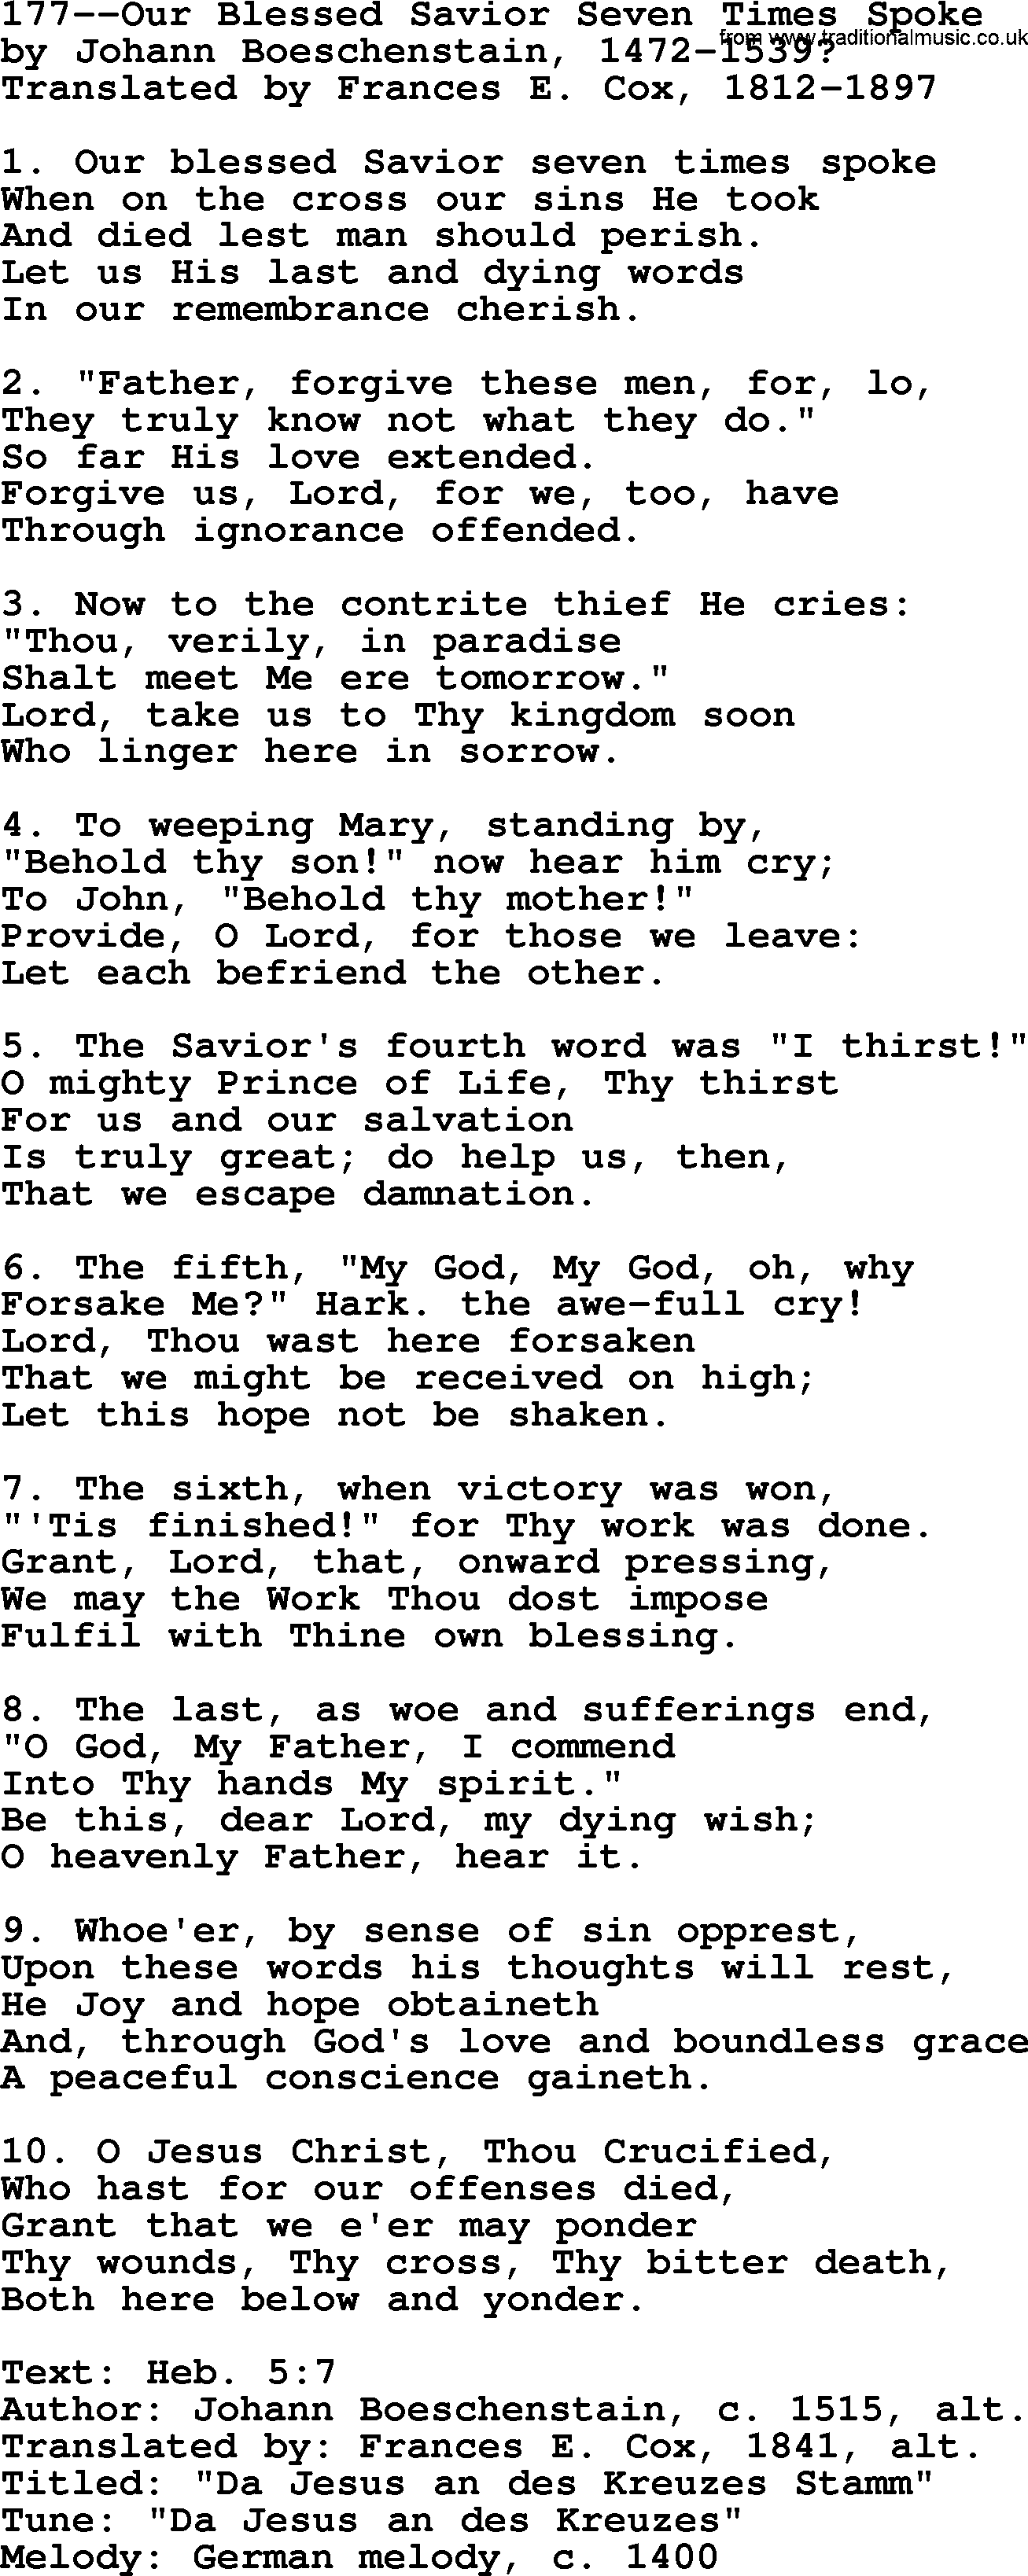 Lutheran Hymn: 177--Our Blessed Savior Seven Times Spoke.txt lyrics with PDF